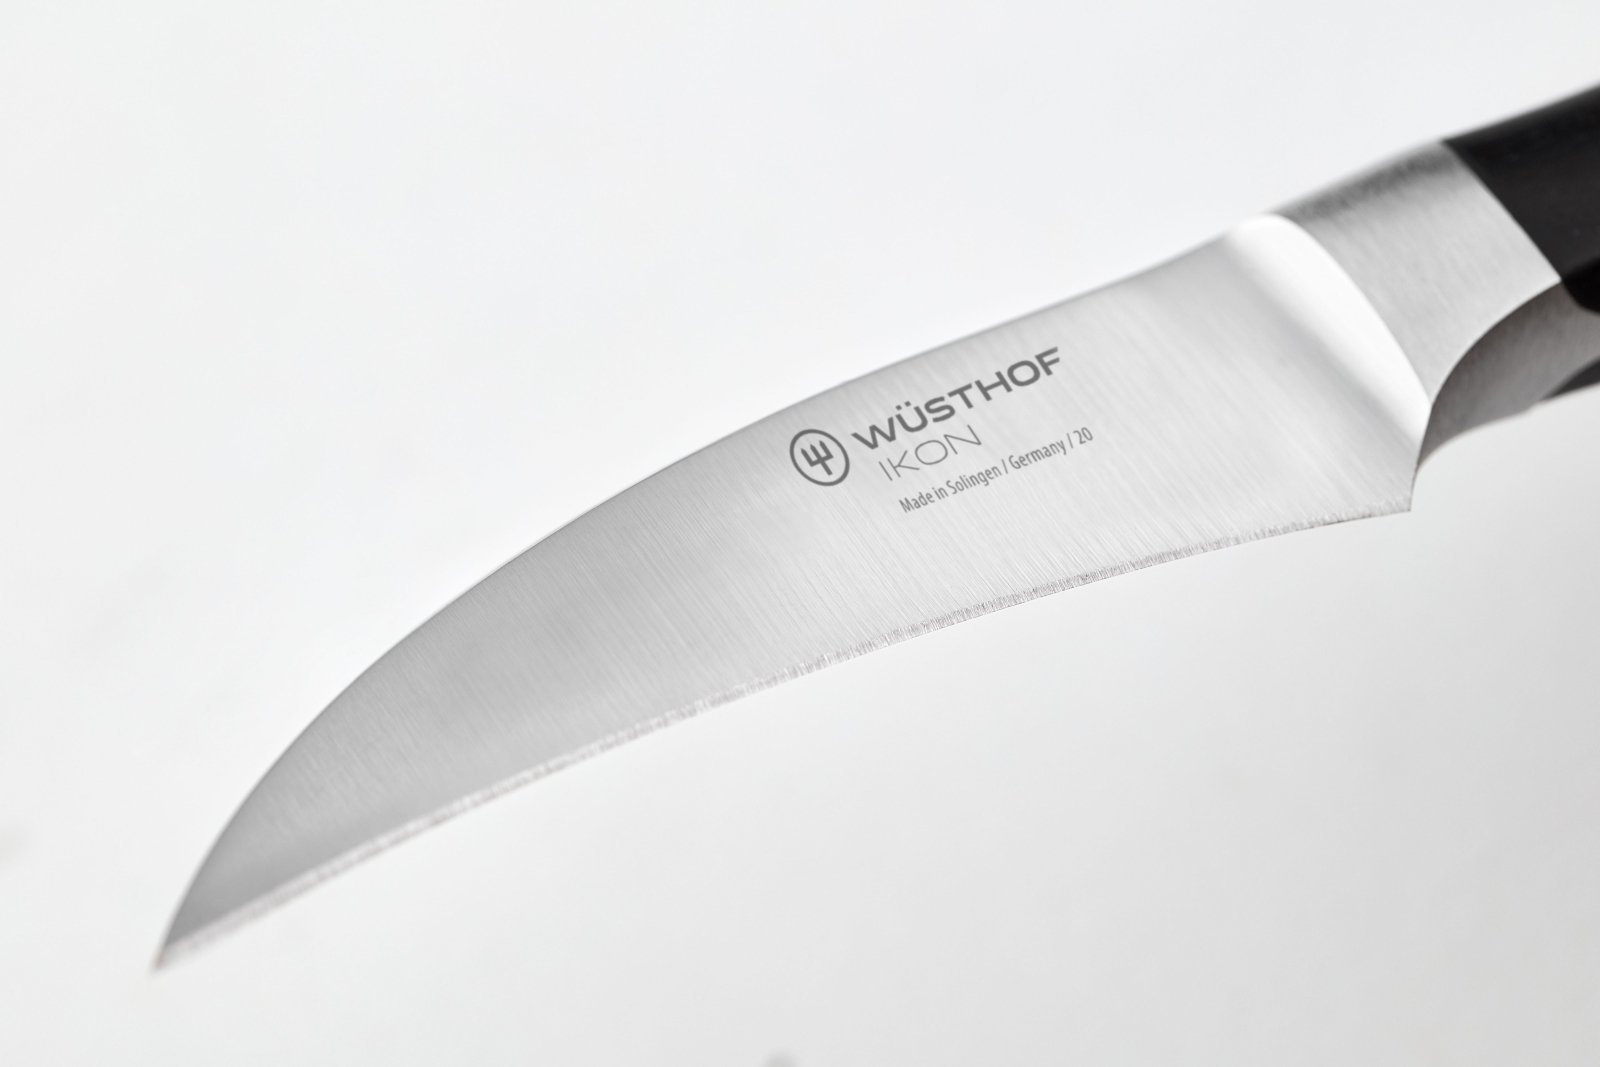 Wusthof IKON 7cm Peeling Knife - WT1010532207 - The Cotswold Knife Company